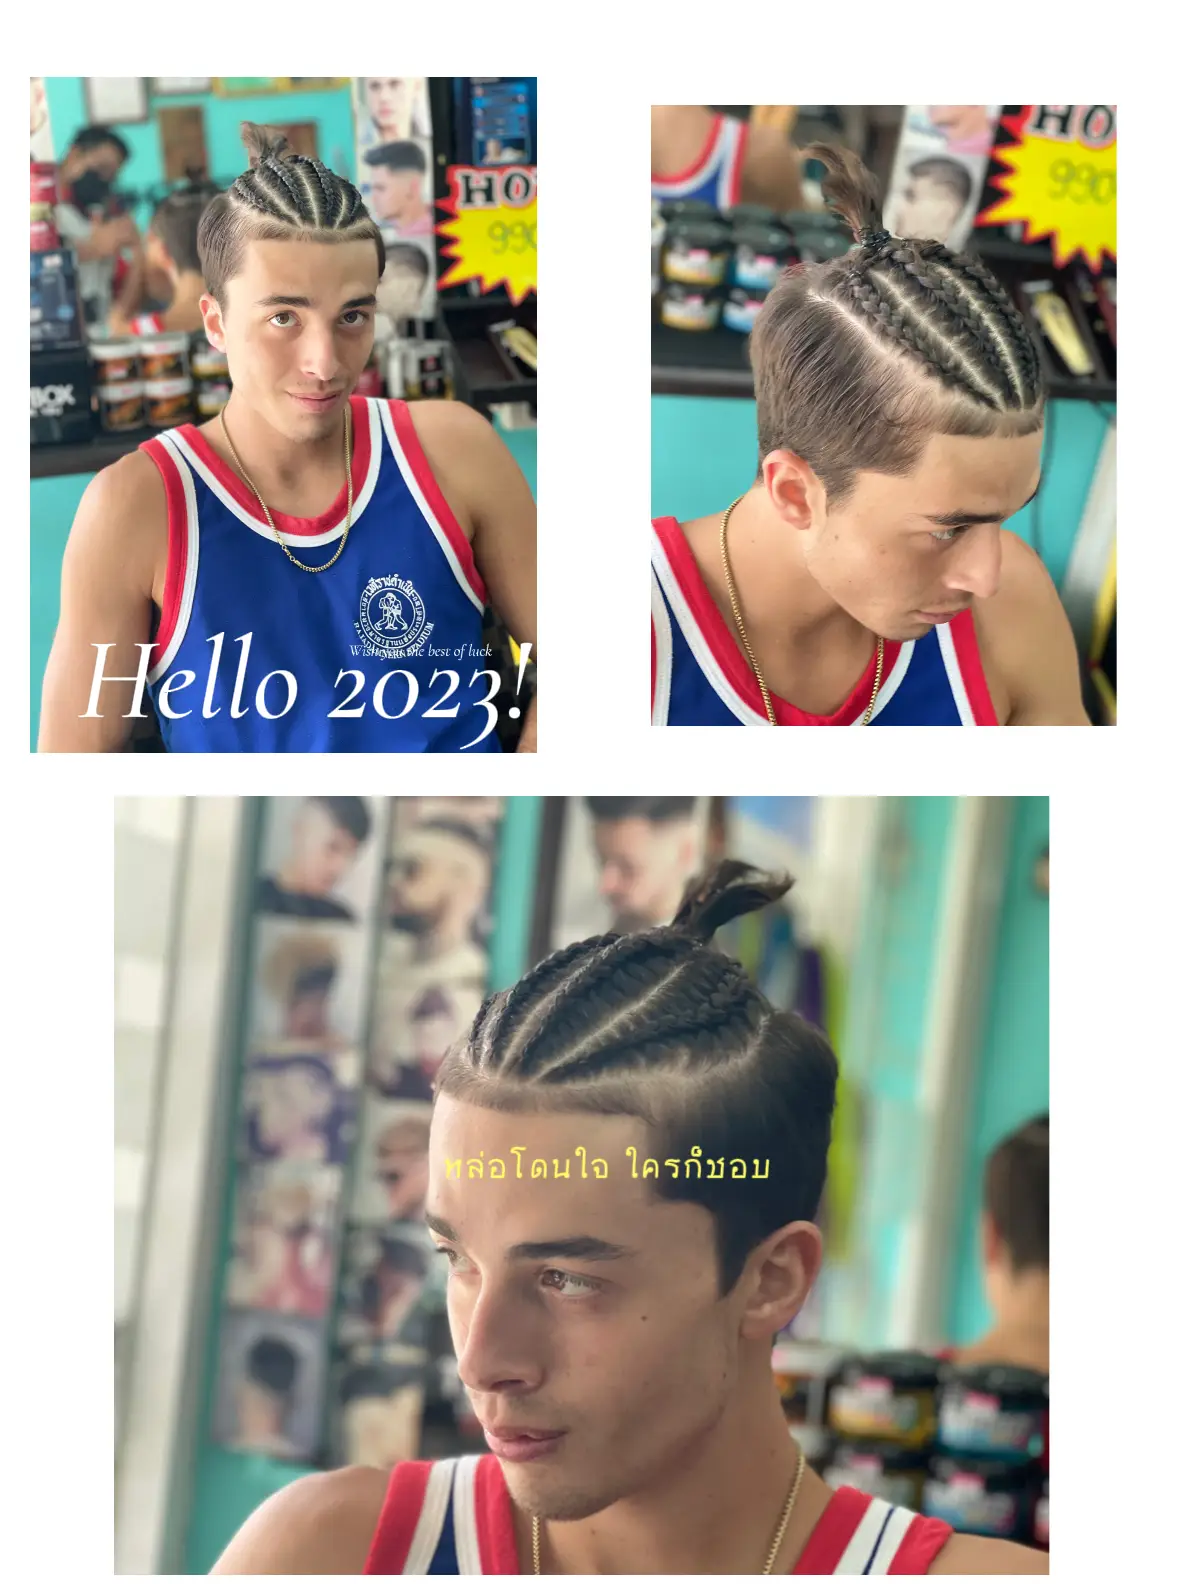 Latest pic 😍  Mohawk hairstyles men, Men hair color, Kids hair cuts